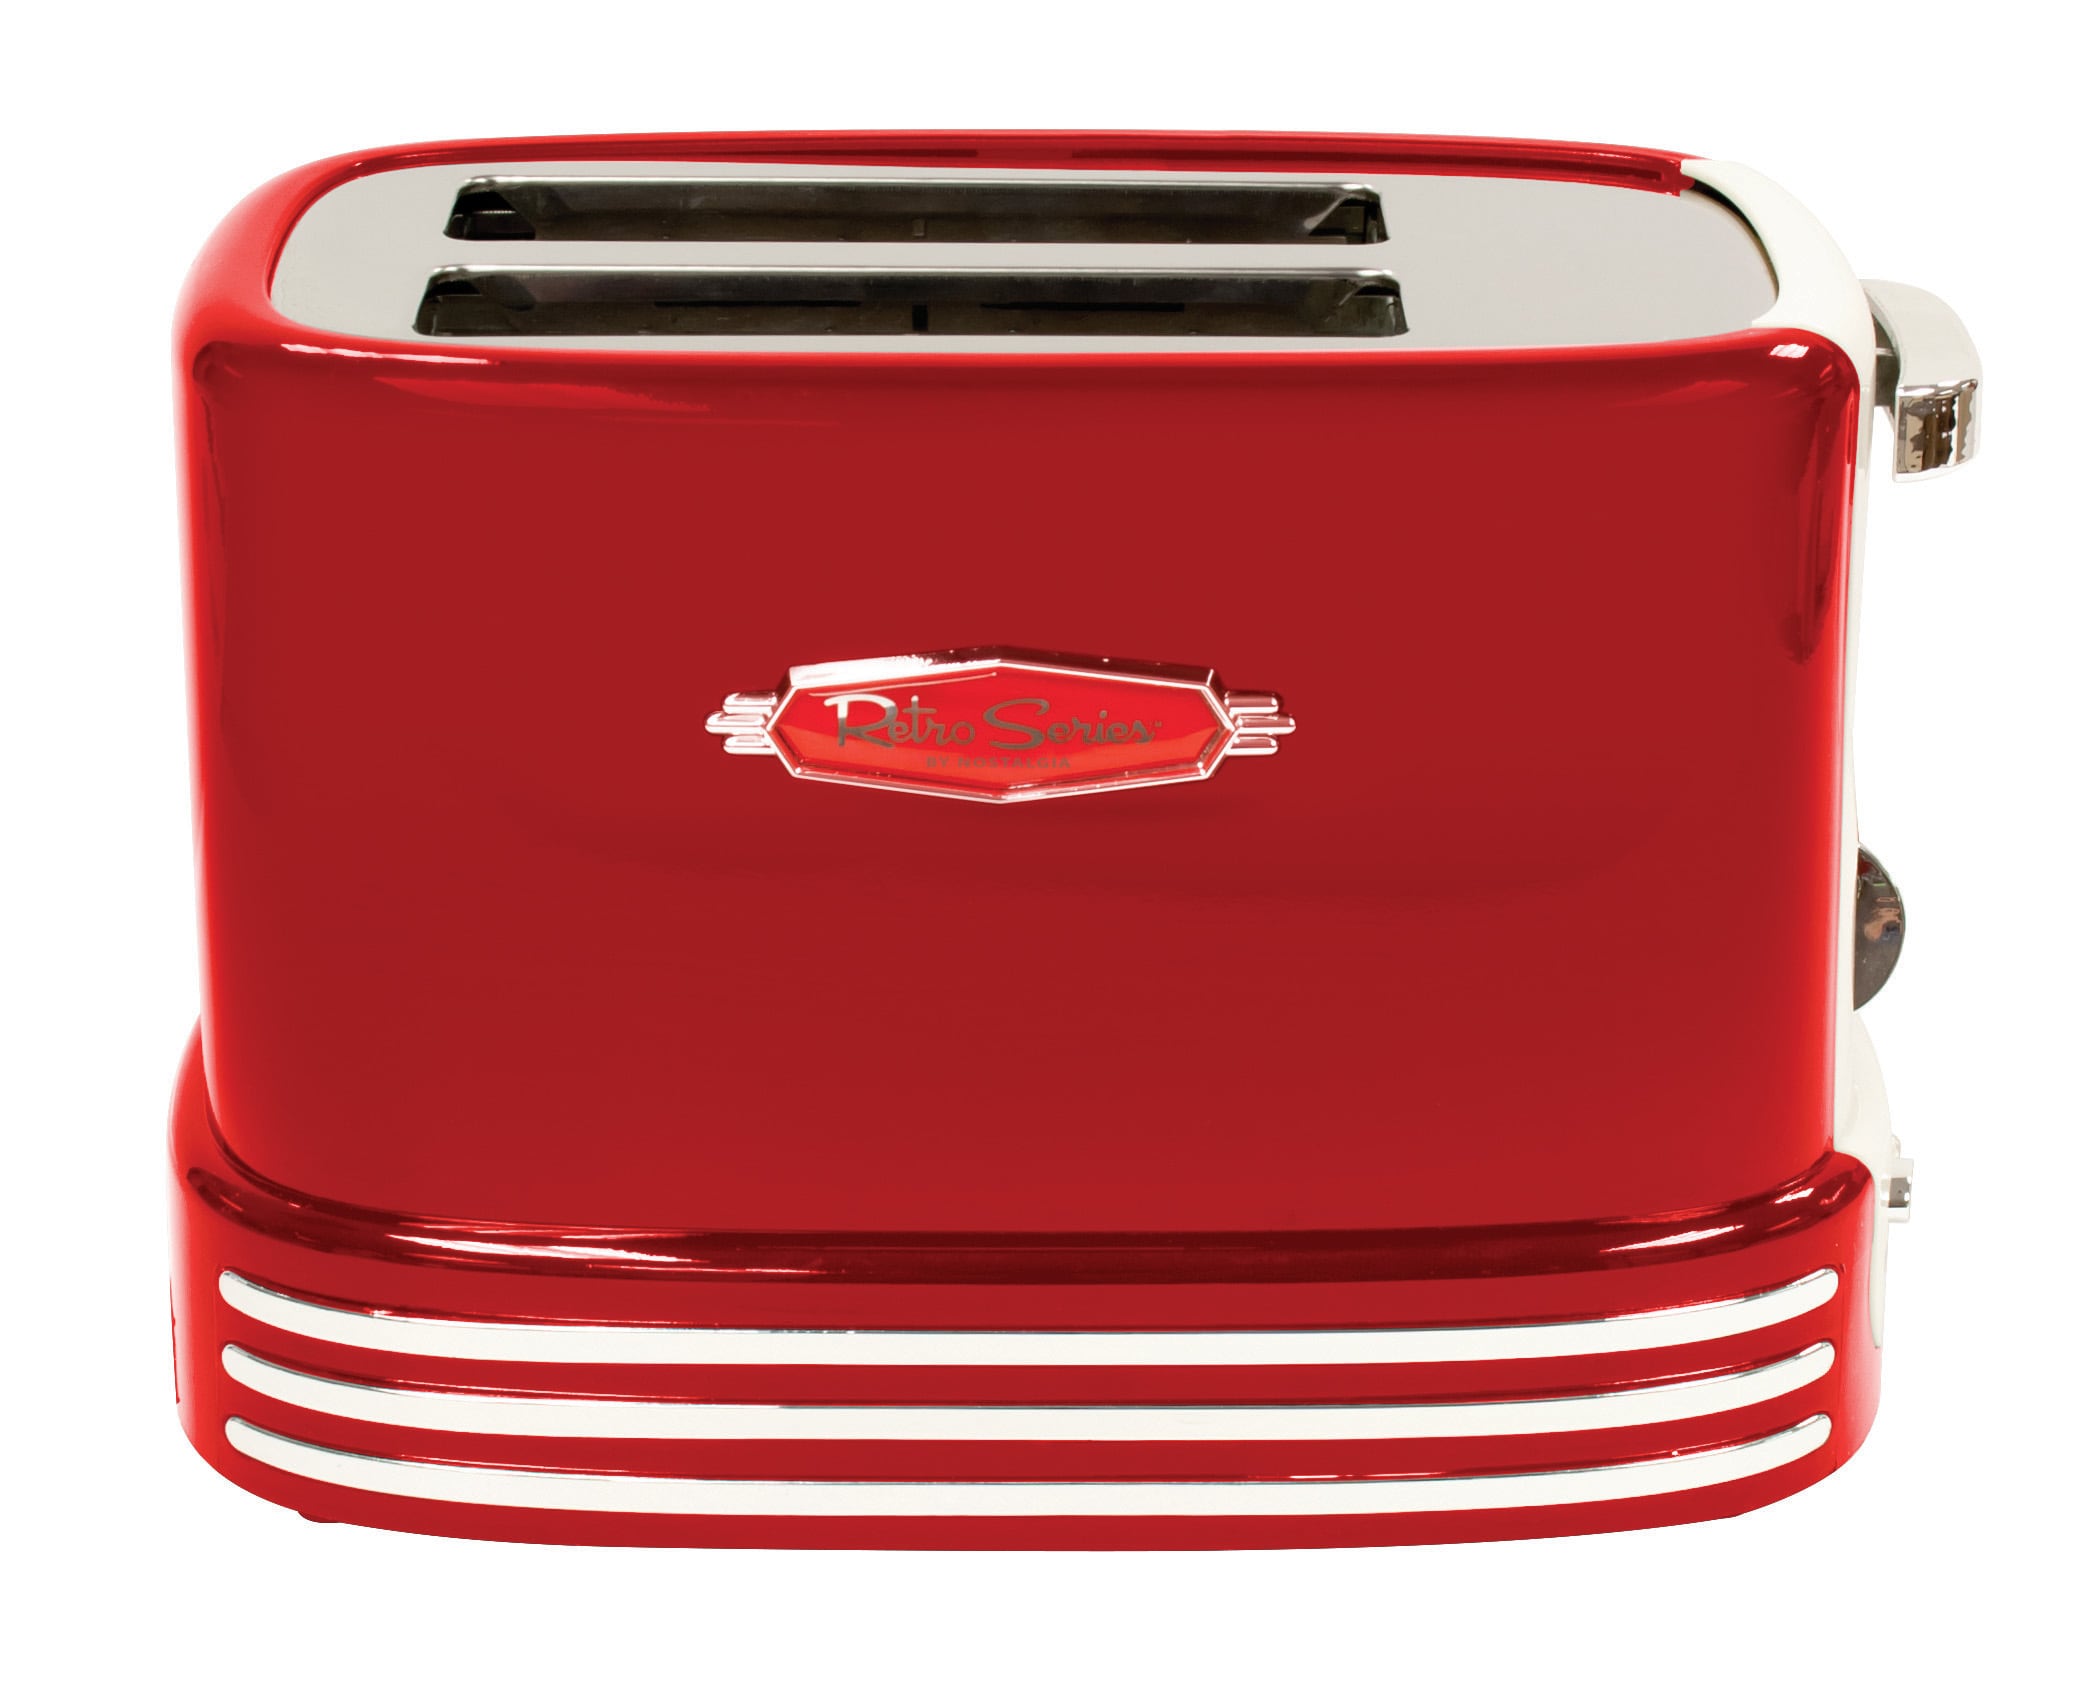 Nostalgia Retro 2-Slice Bagel Toaster - Pink